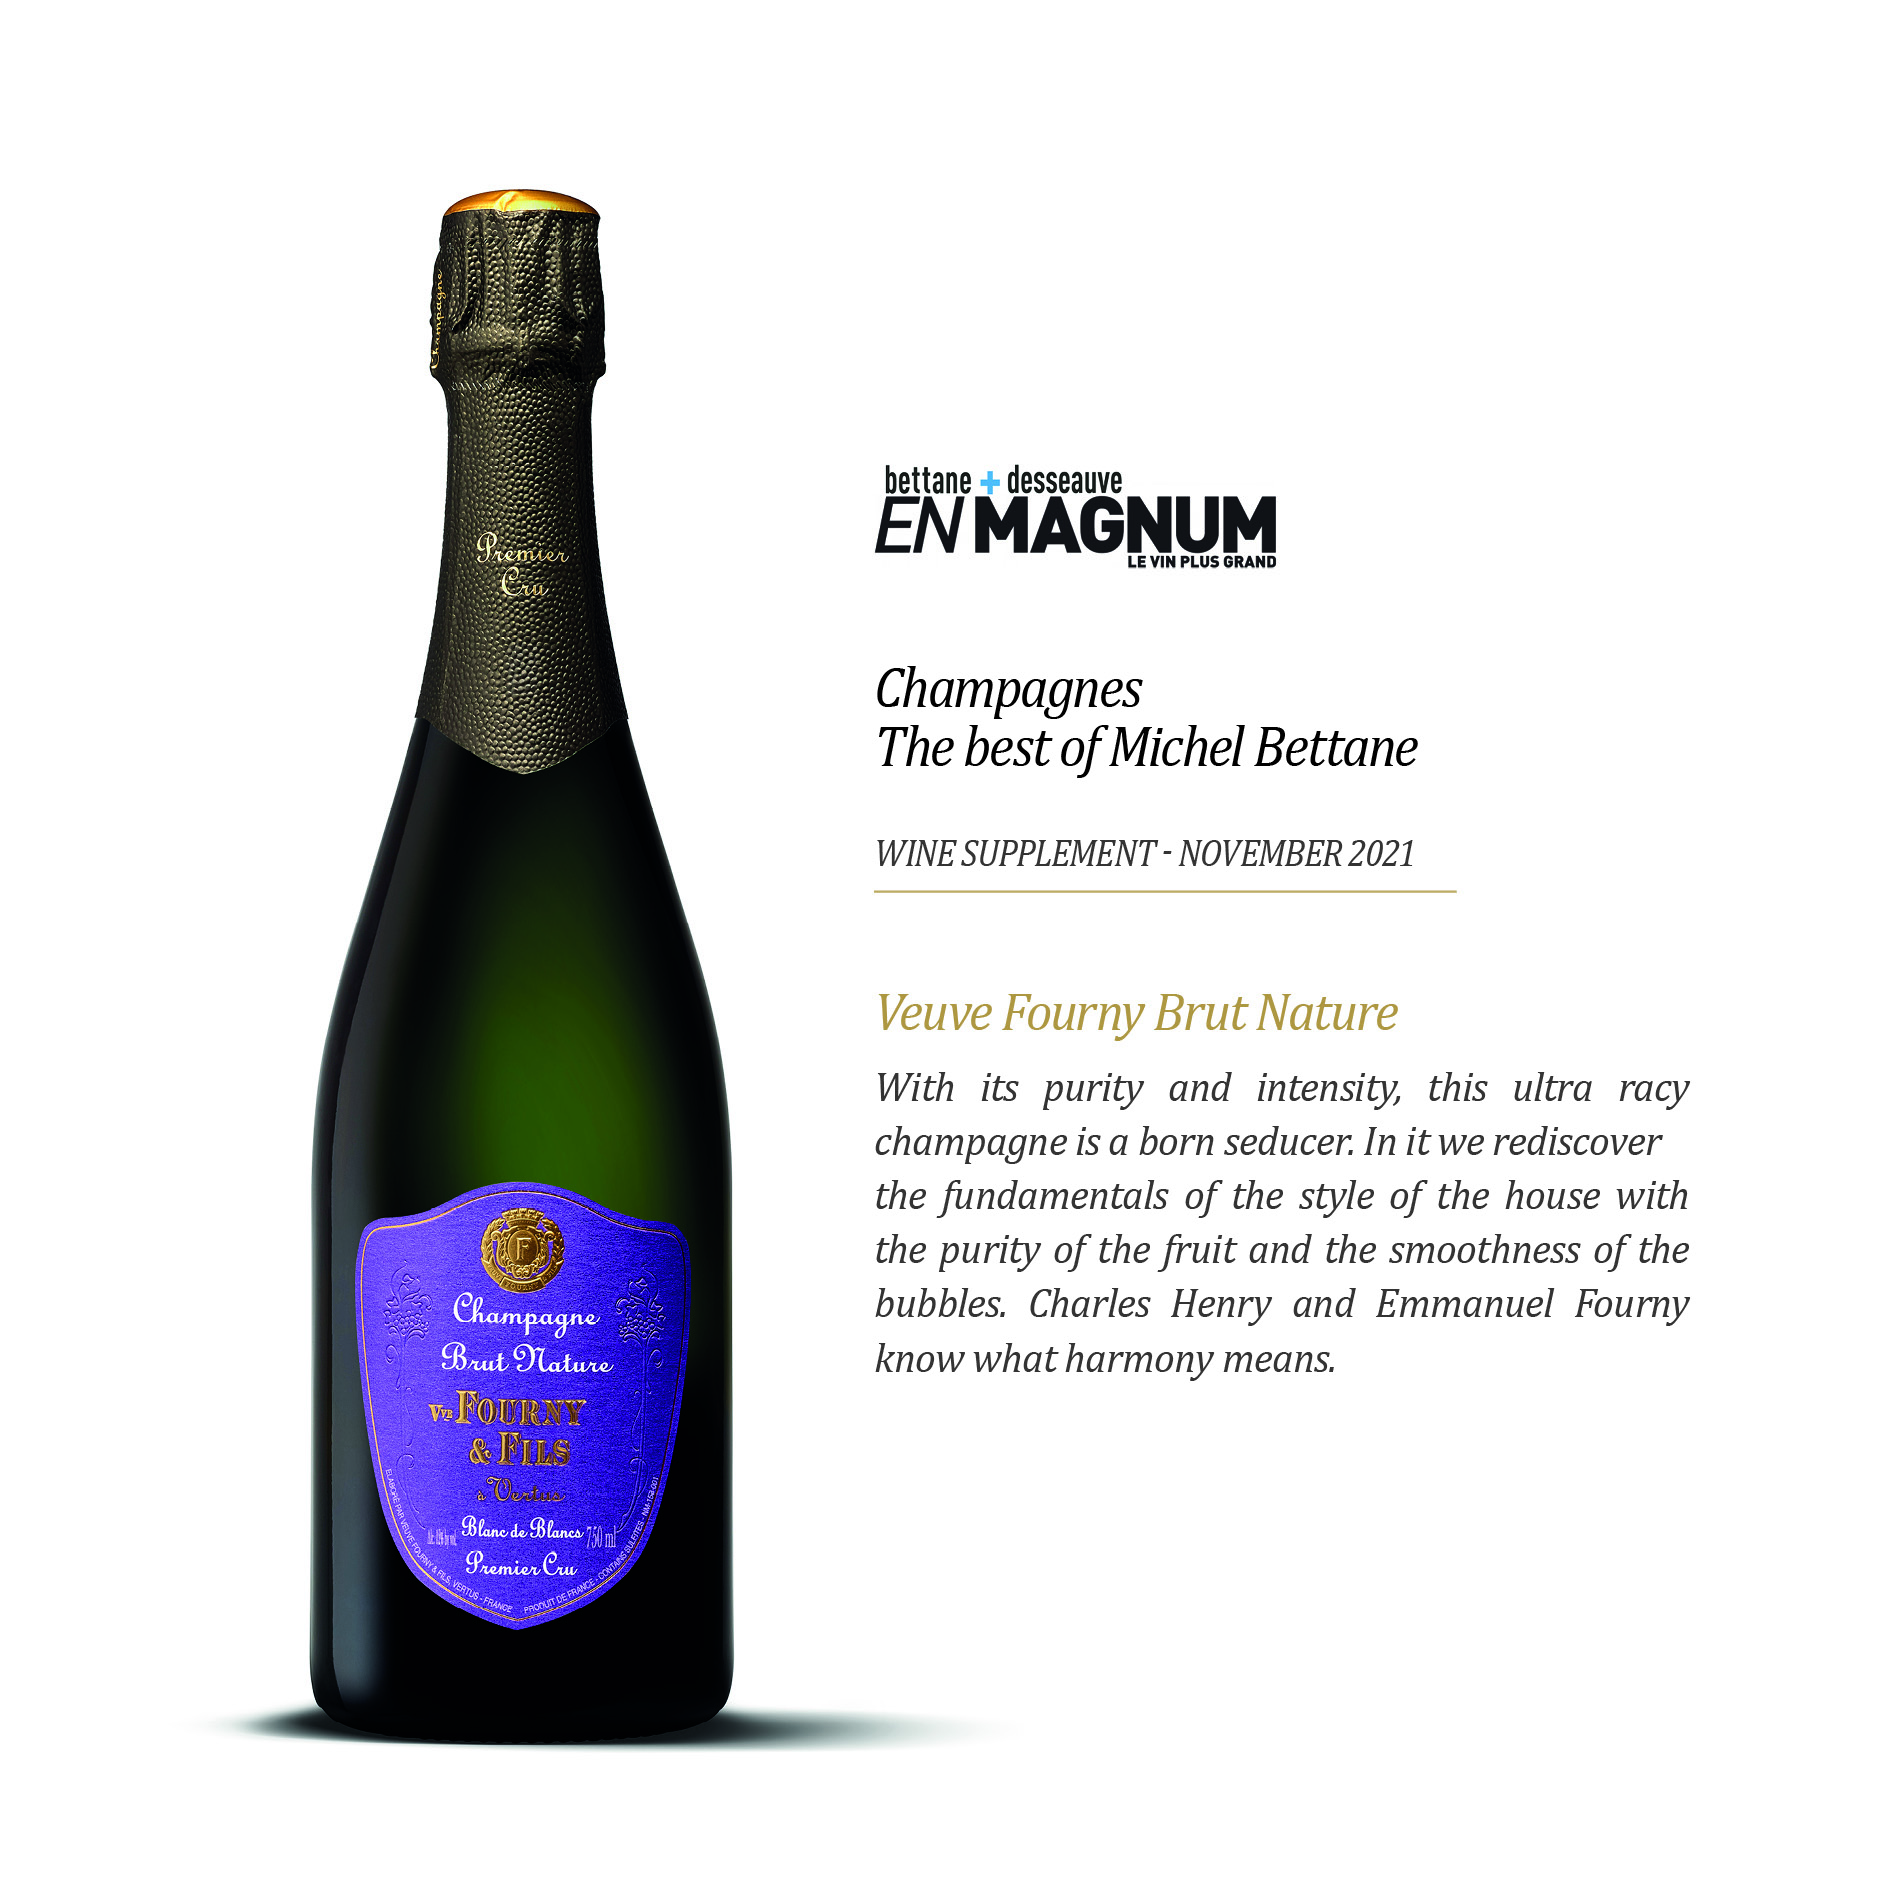 Champagnes The best of Michel Bettane - Bettane & Desseauve